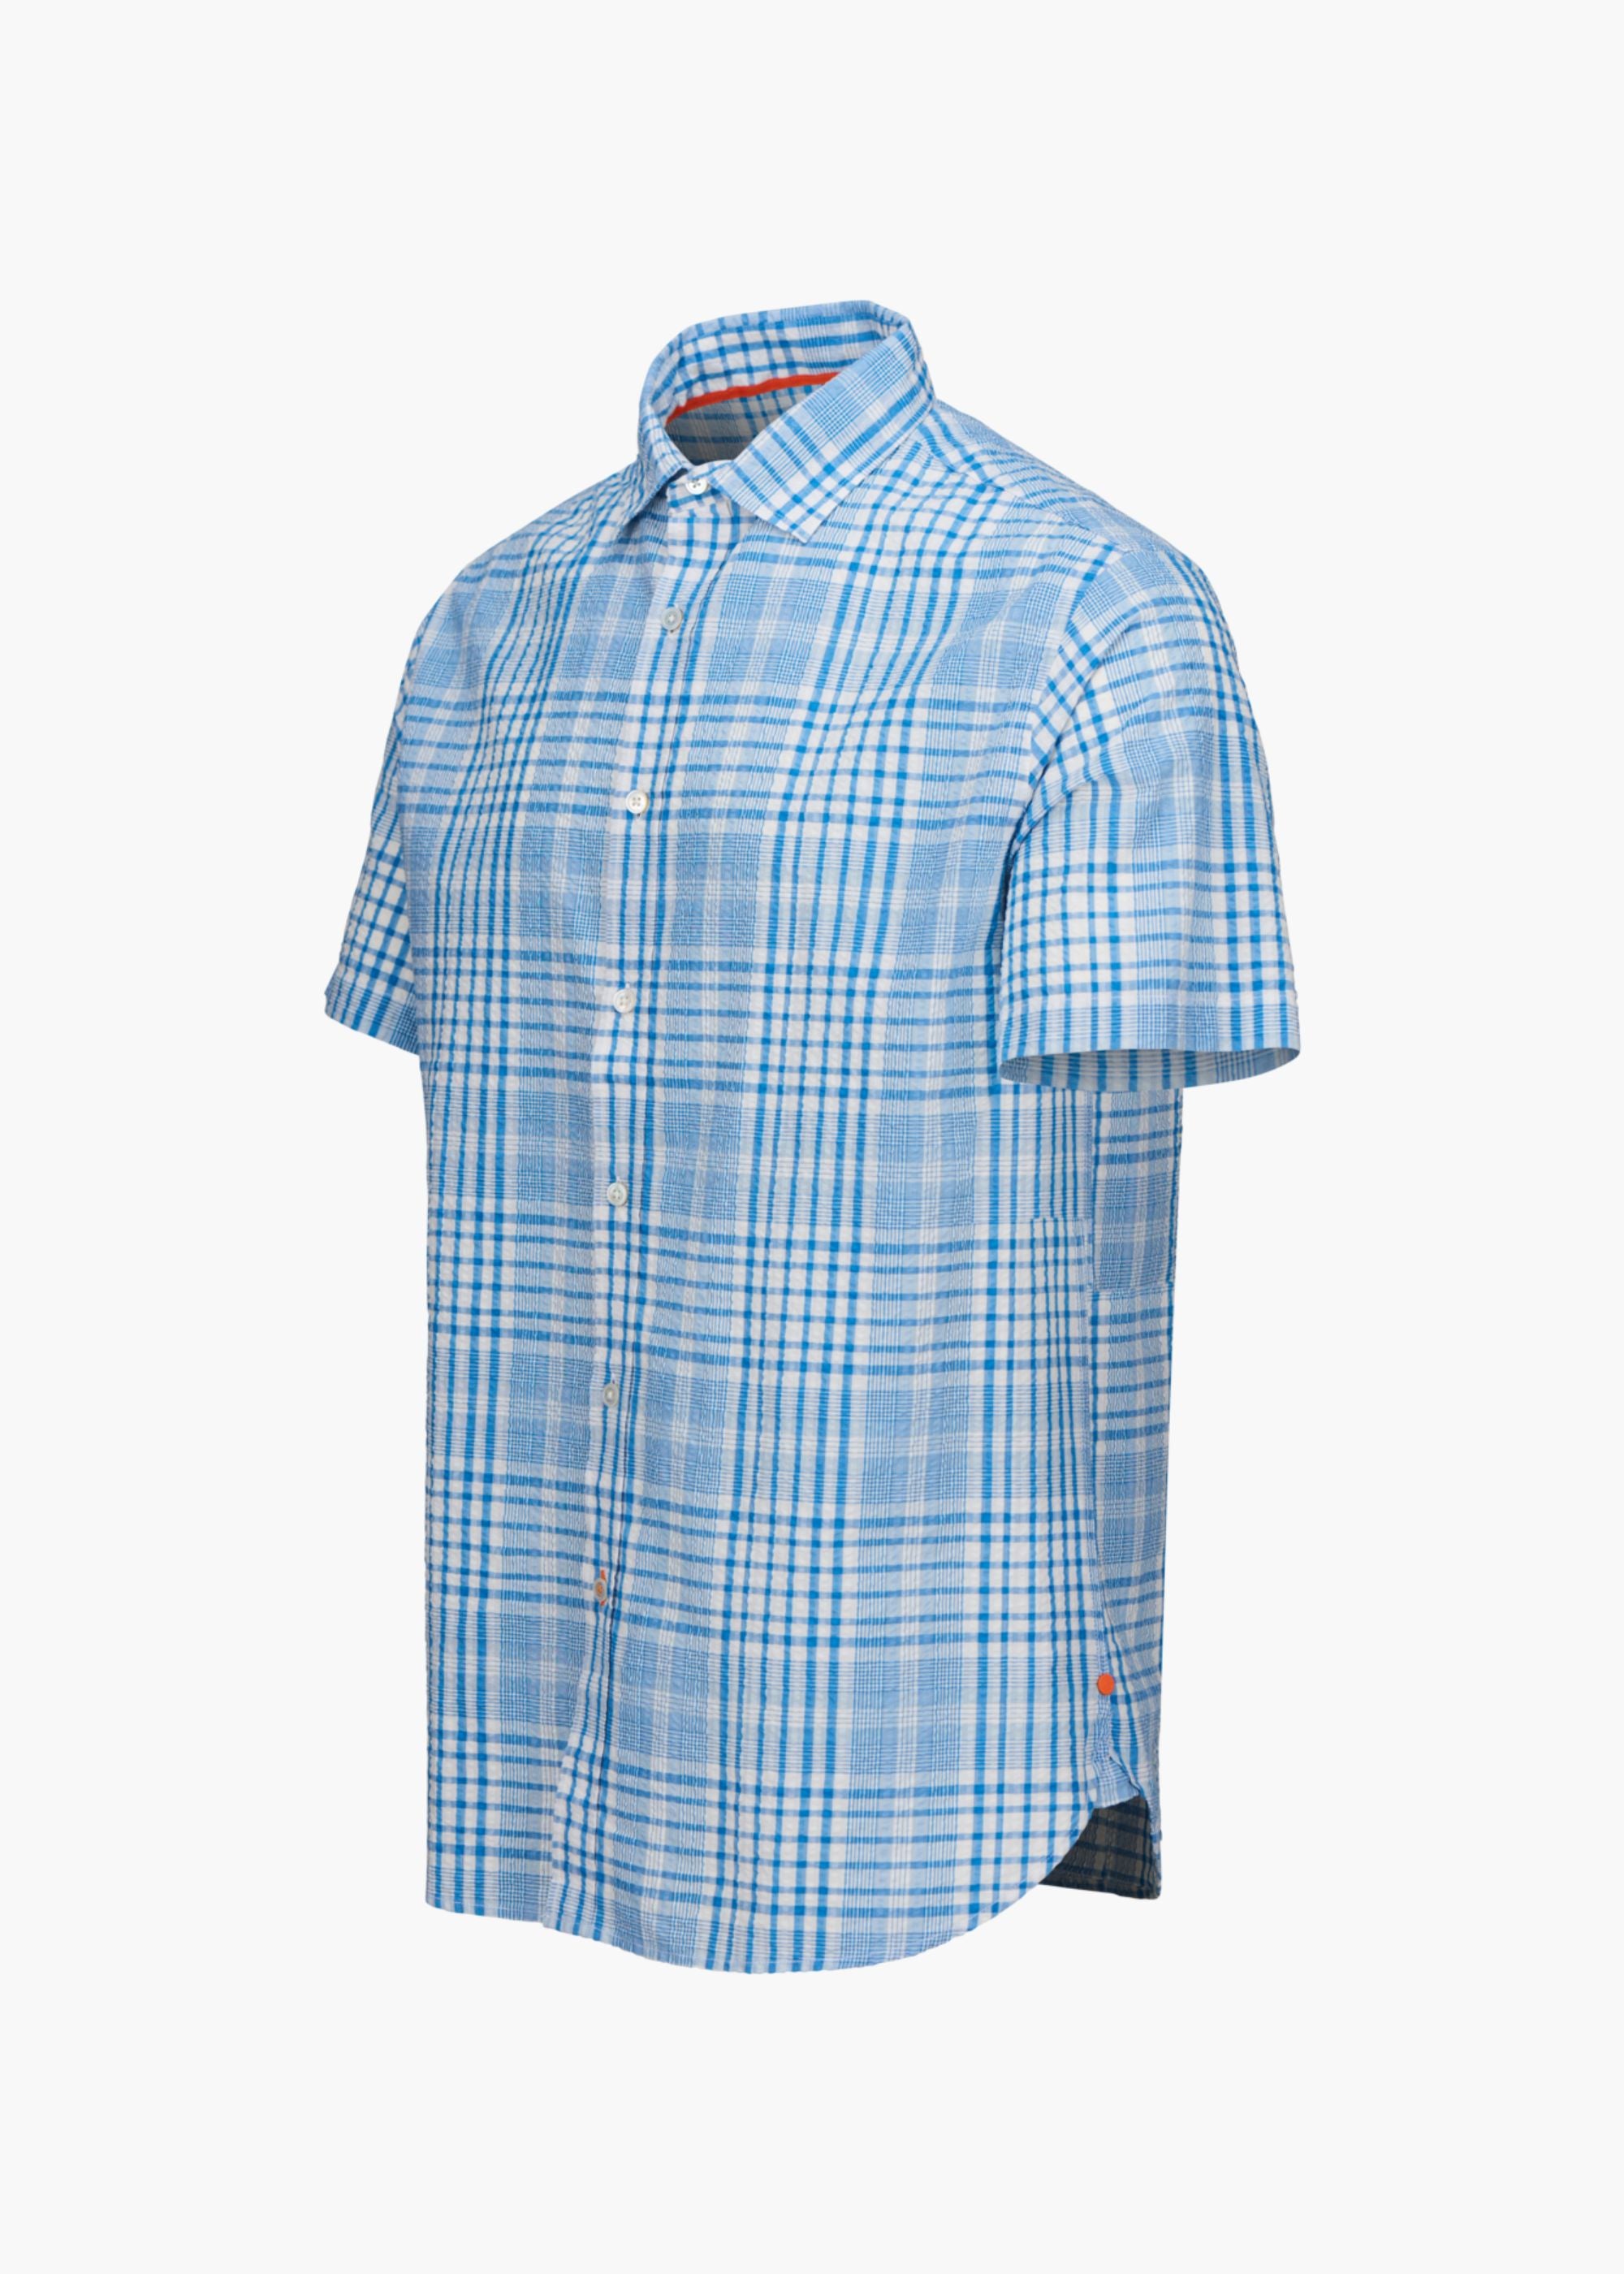 Furore Woven Shirt - background::white,variant::Blue Skies